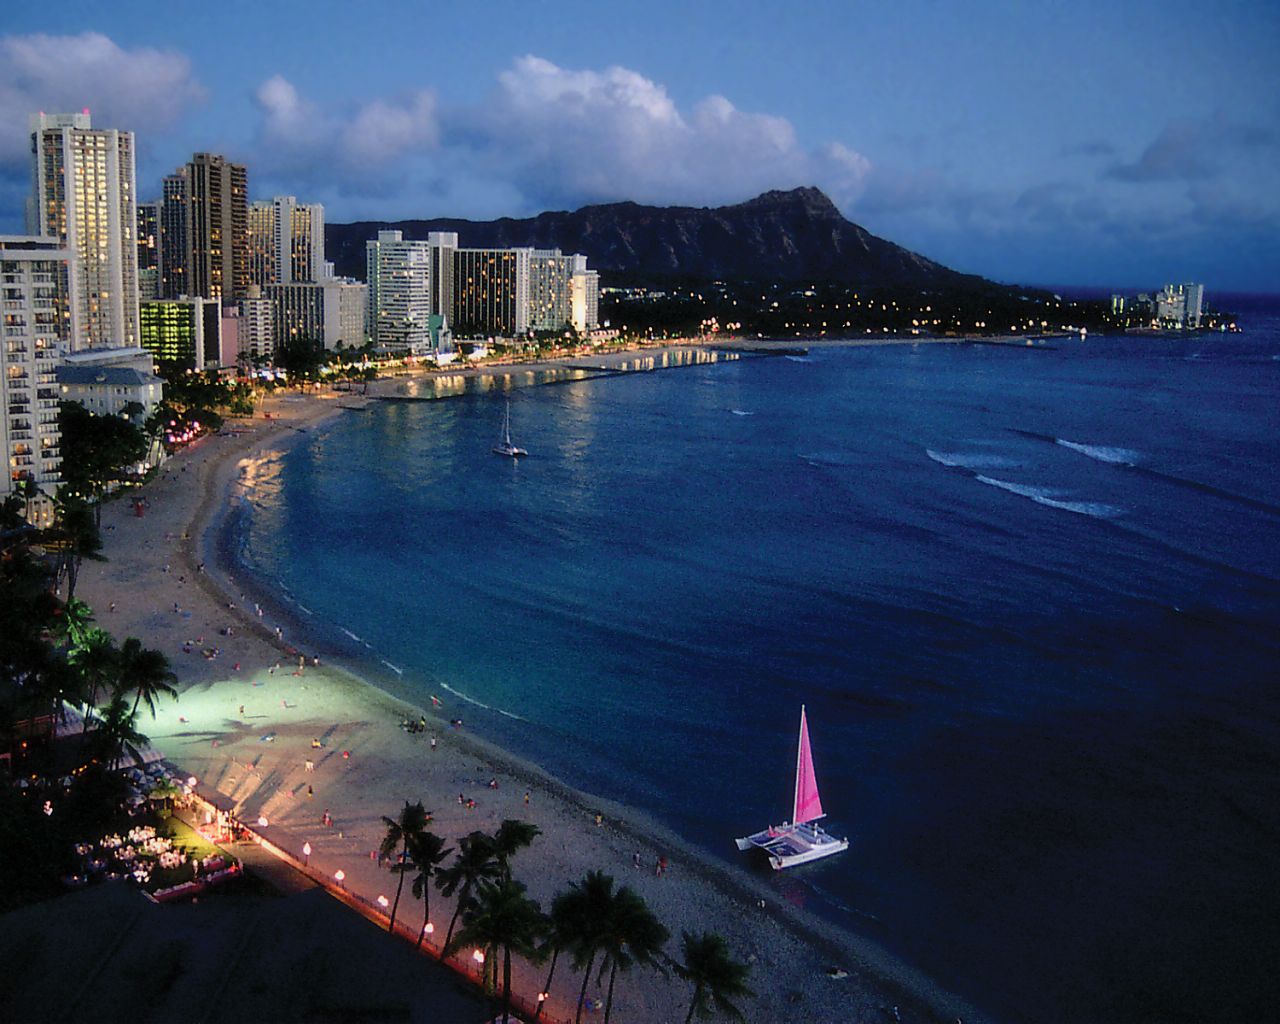 Evening Scenery Of Waikiki